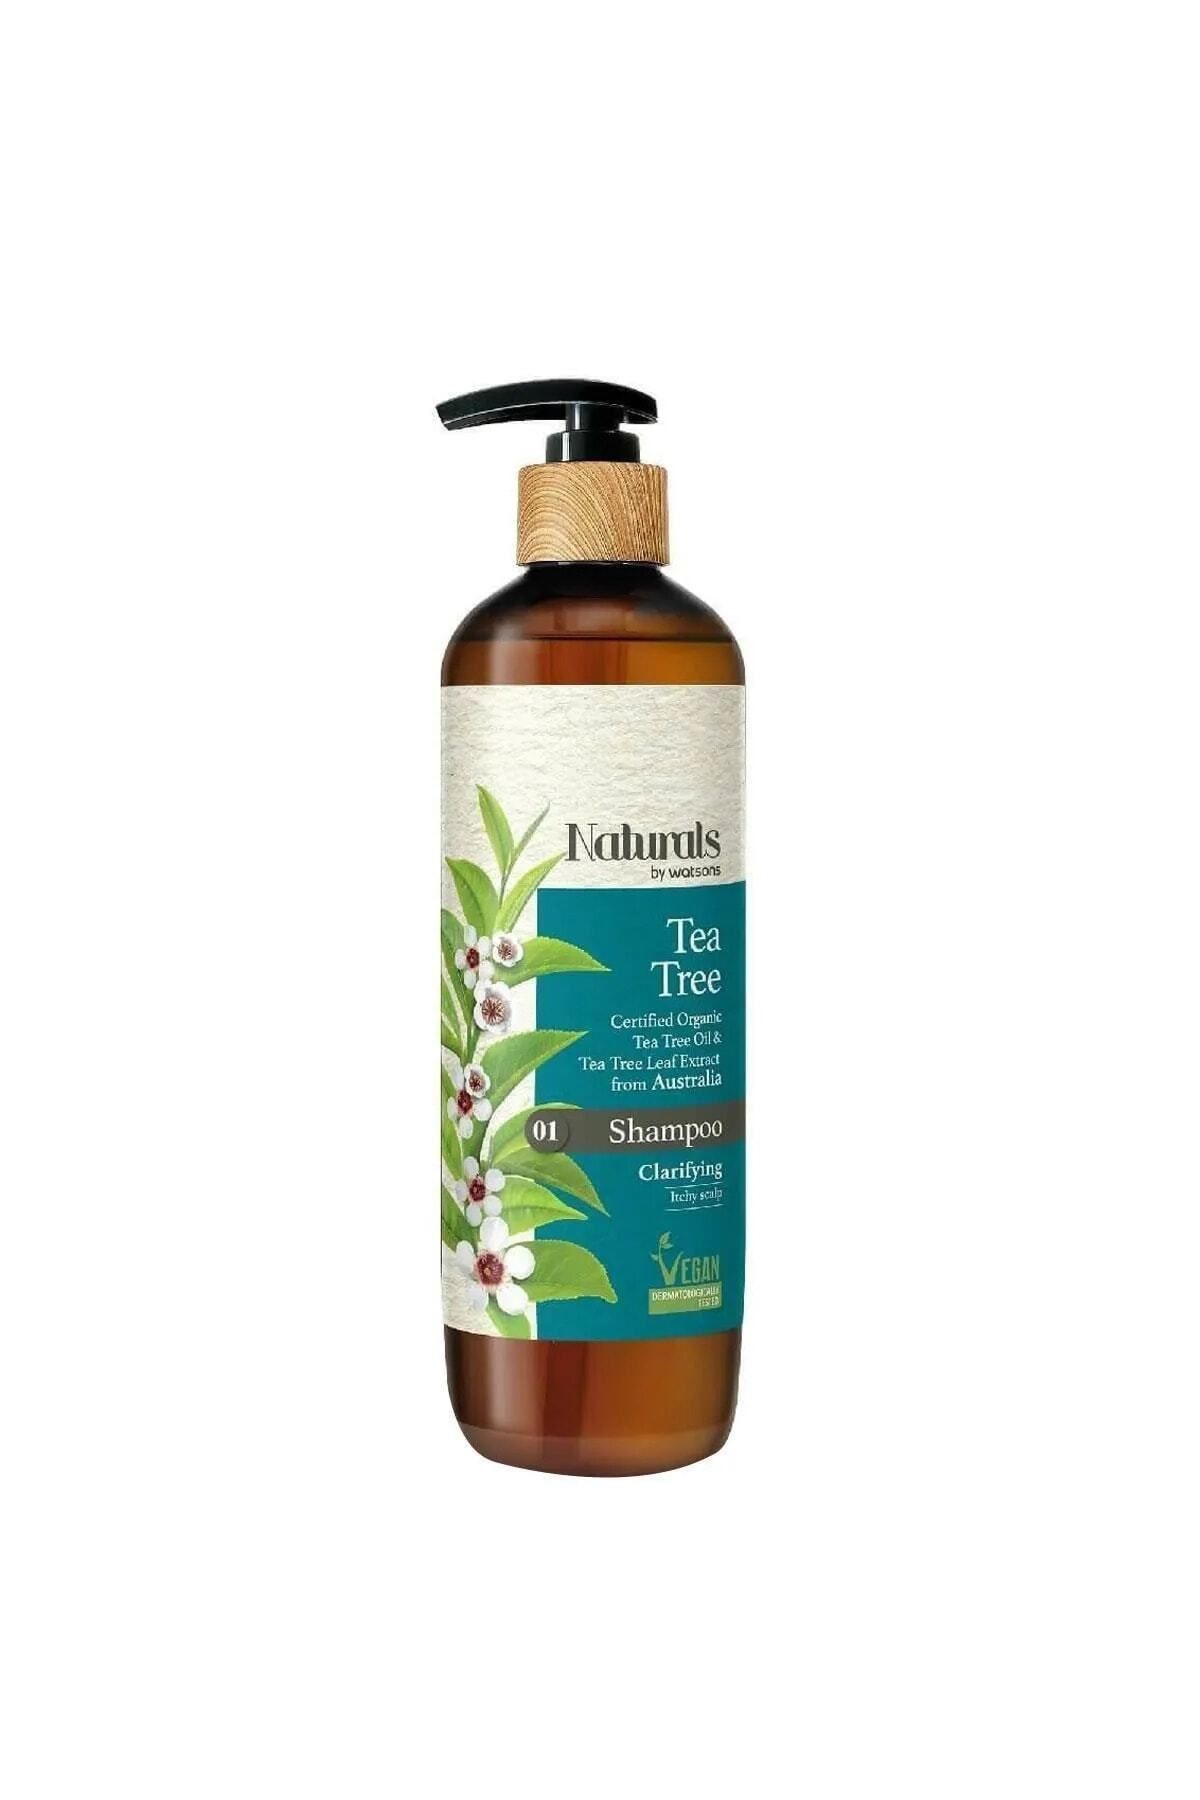 Watsons Naturals By Shampoo Tea Tree 490 Ml